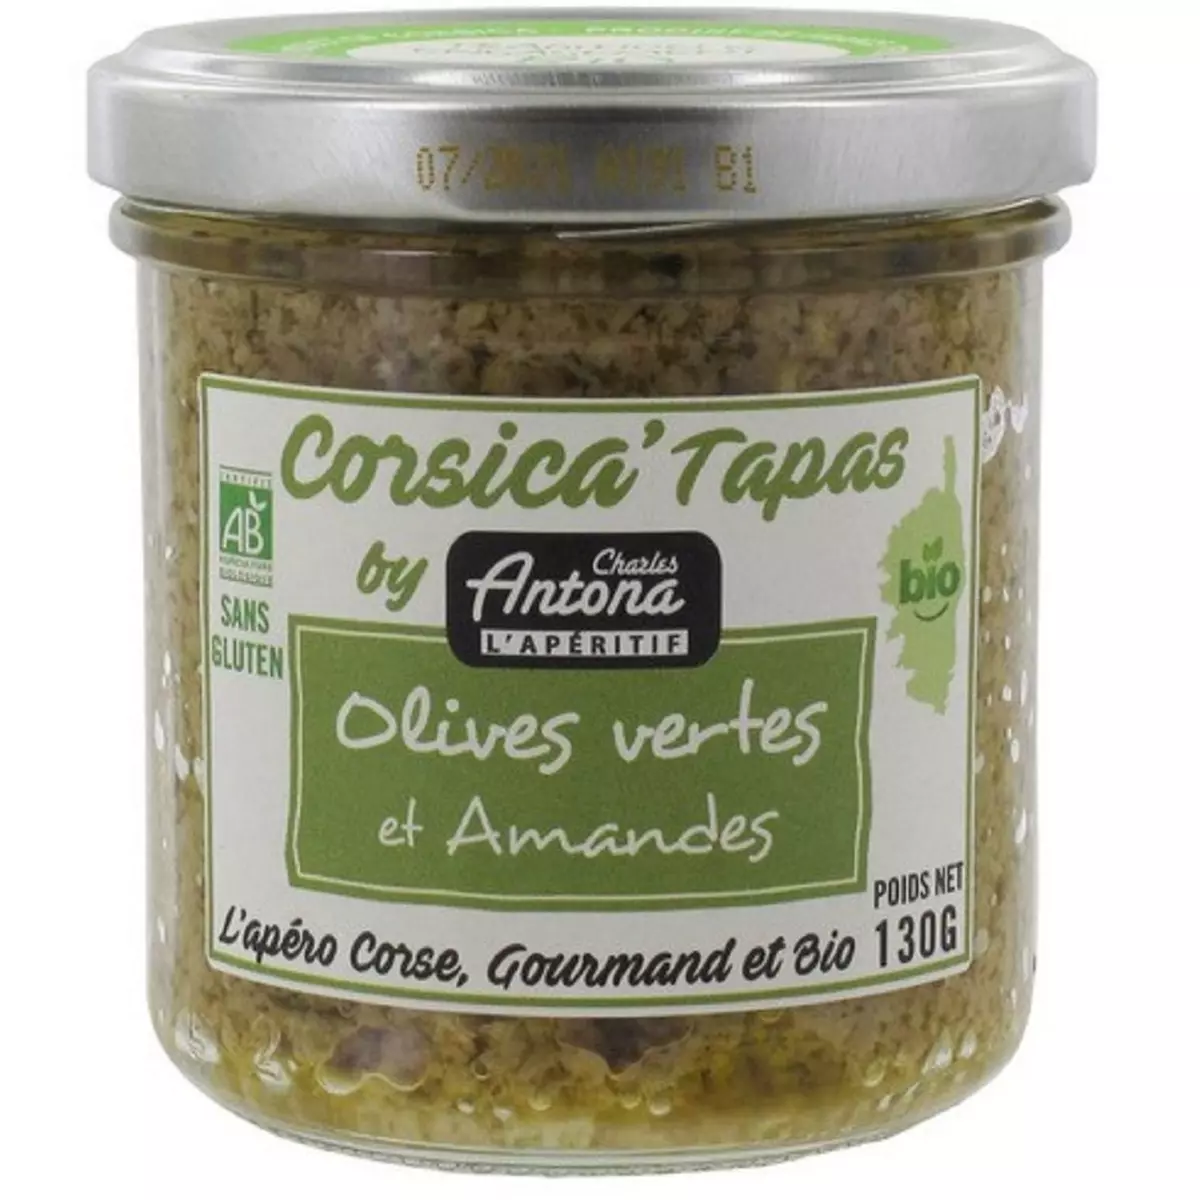 CHARLES ANTONA Corsica' Tapas olives vertes et amandes bio 130g